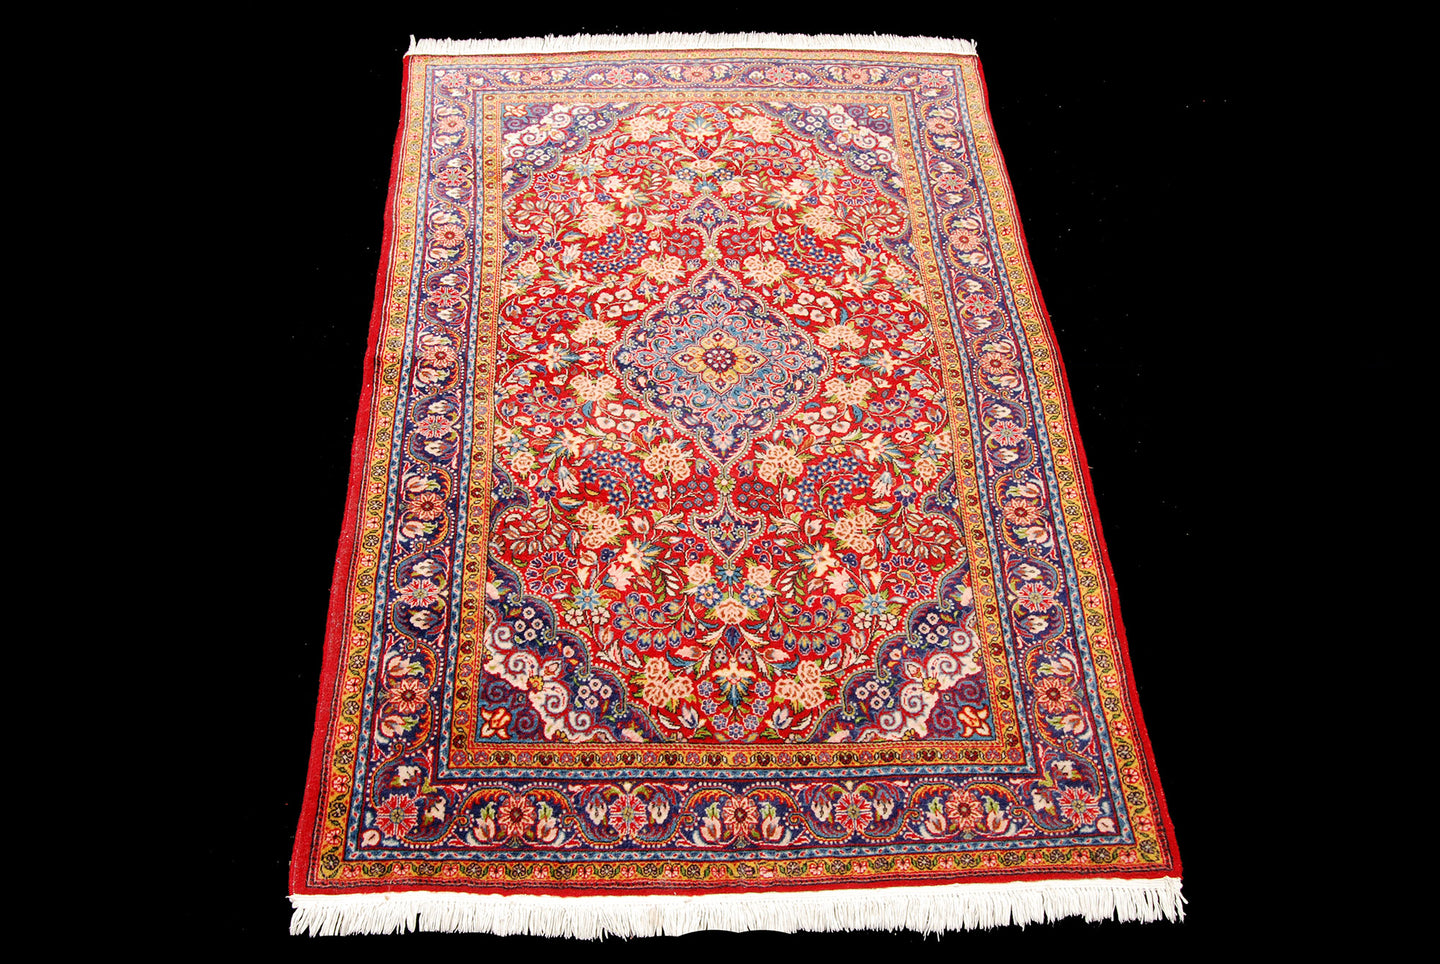 Authentic original hand knotted carpet 157x102 CM